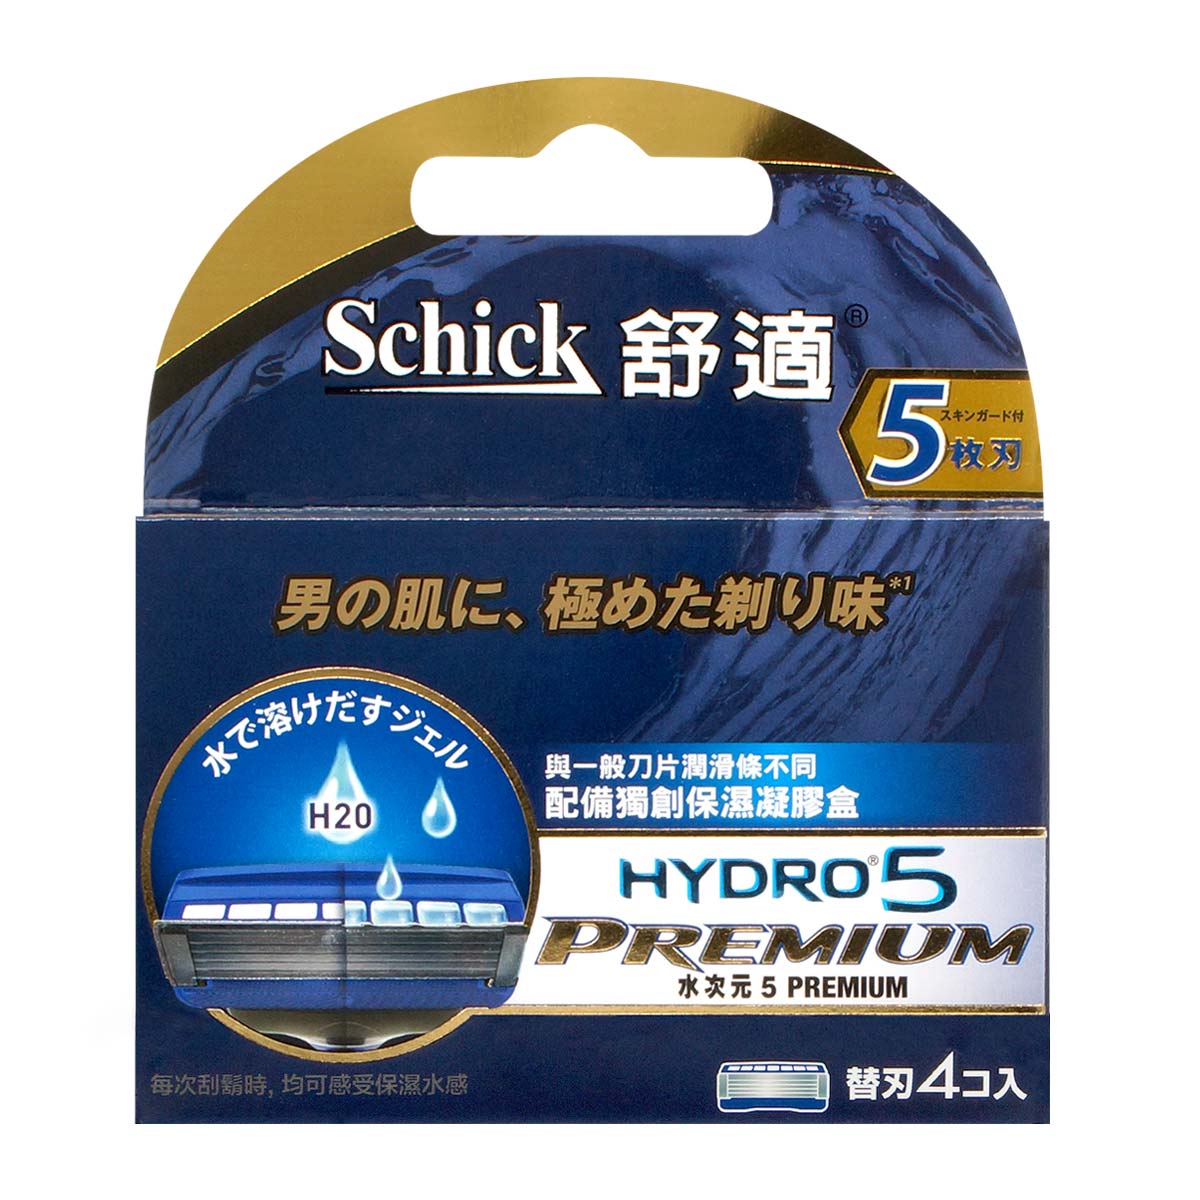 Schick 舒适 Hydro5 Premium 补充装刀片 4 片-p_2